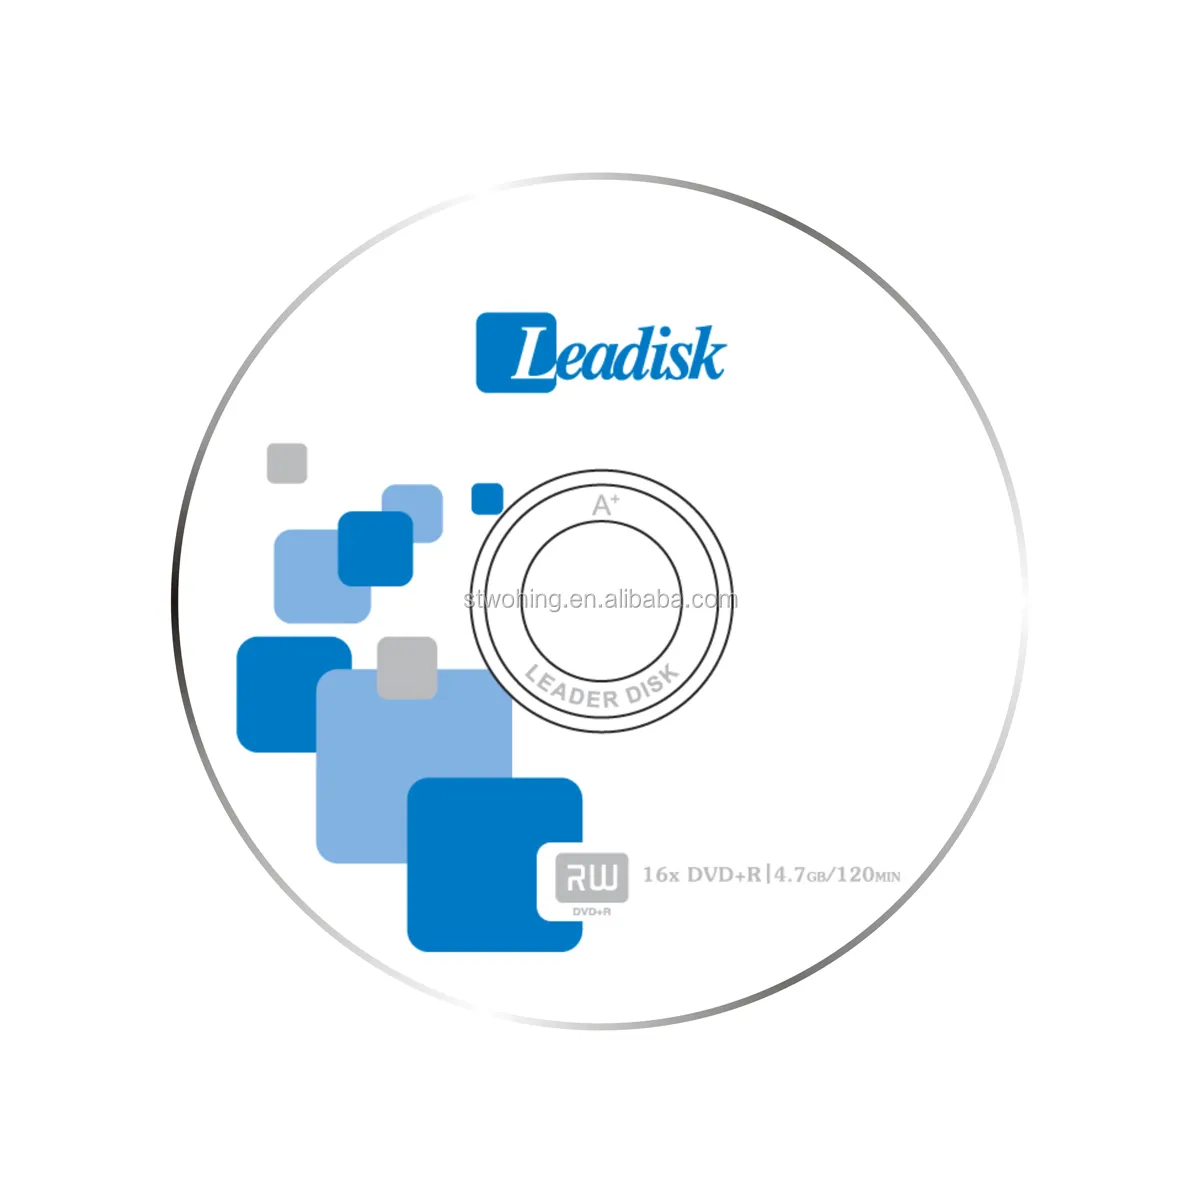 Leadisk blank dvd-r/blank dvdr/wholesale/blank dvd 50 pz mandrino/shrink wrap con rotella chiaro